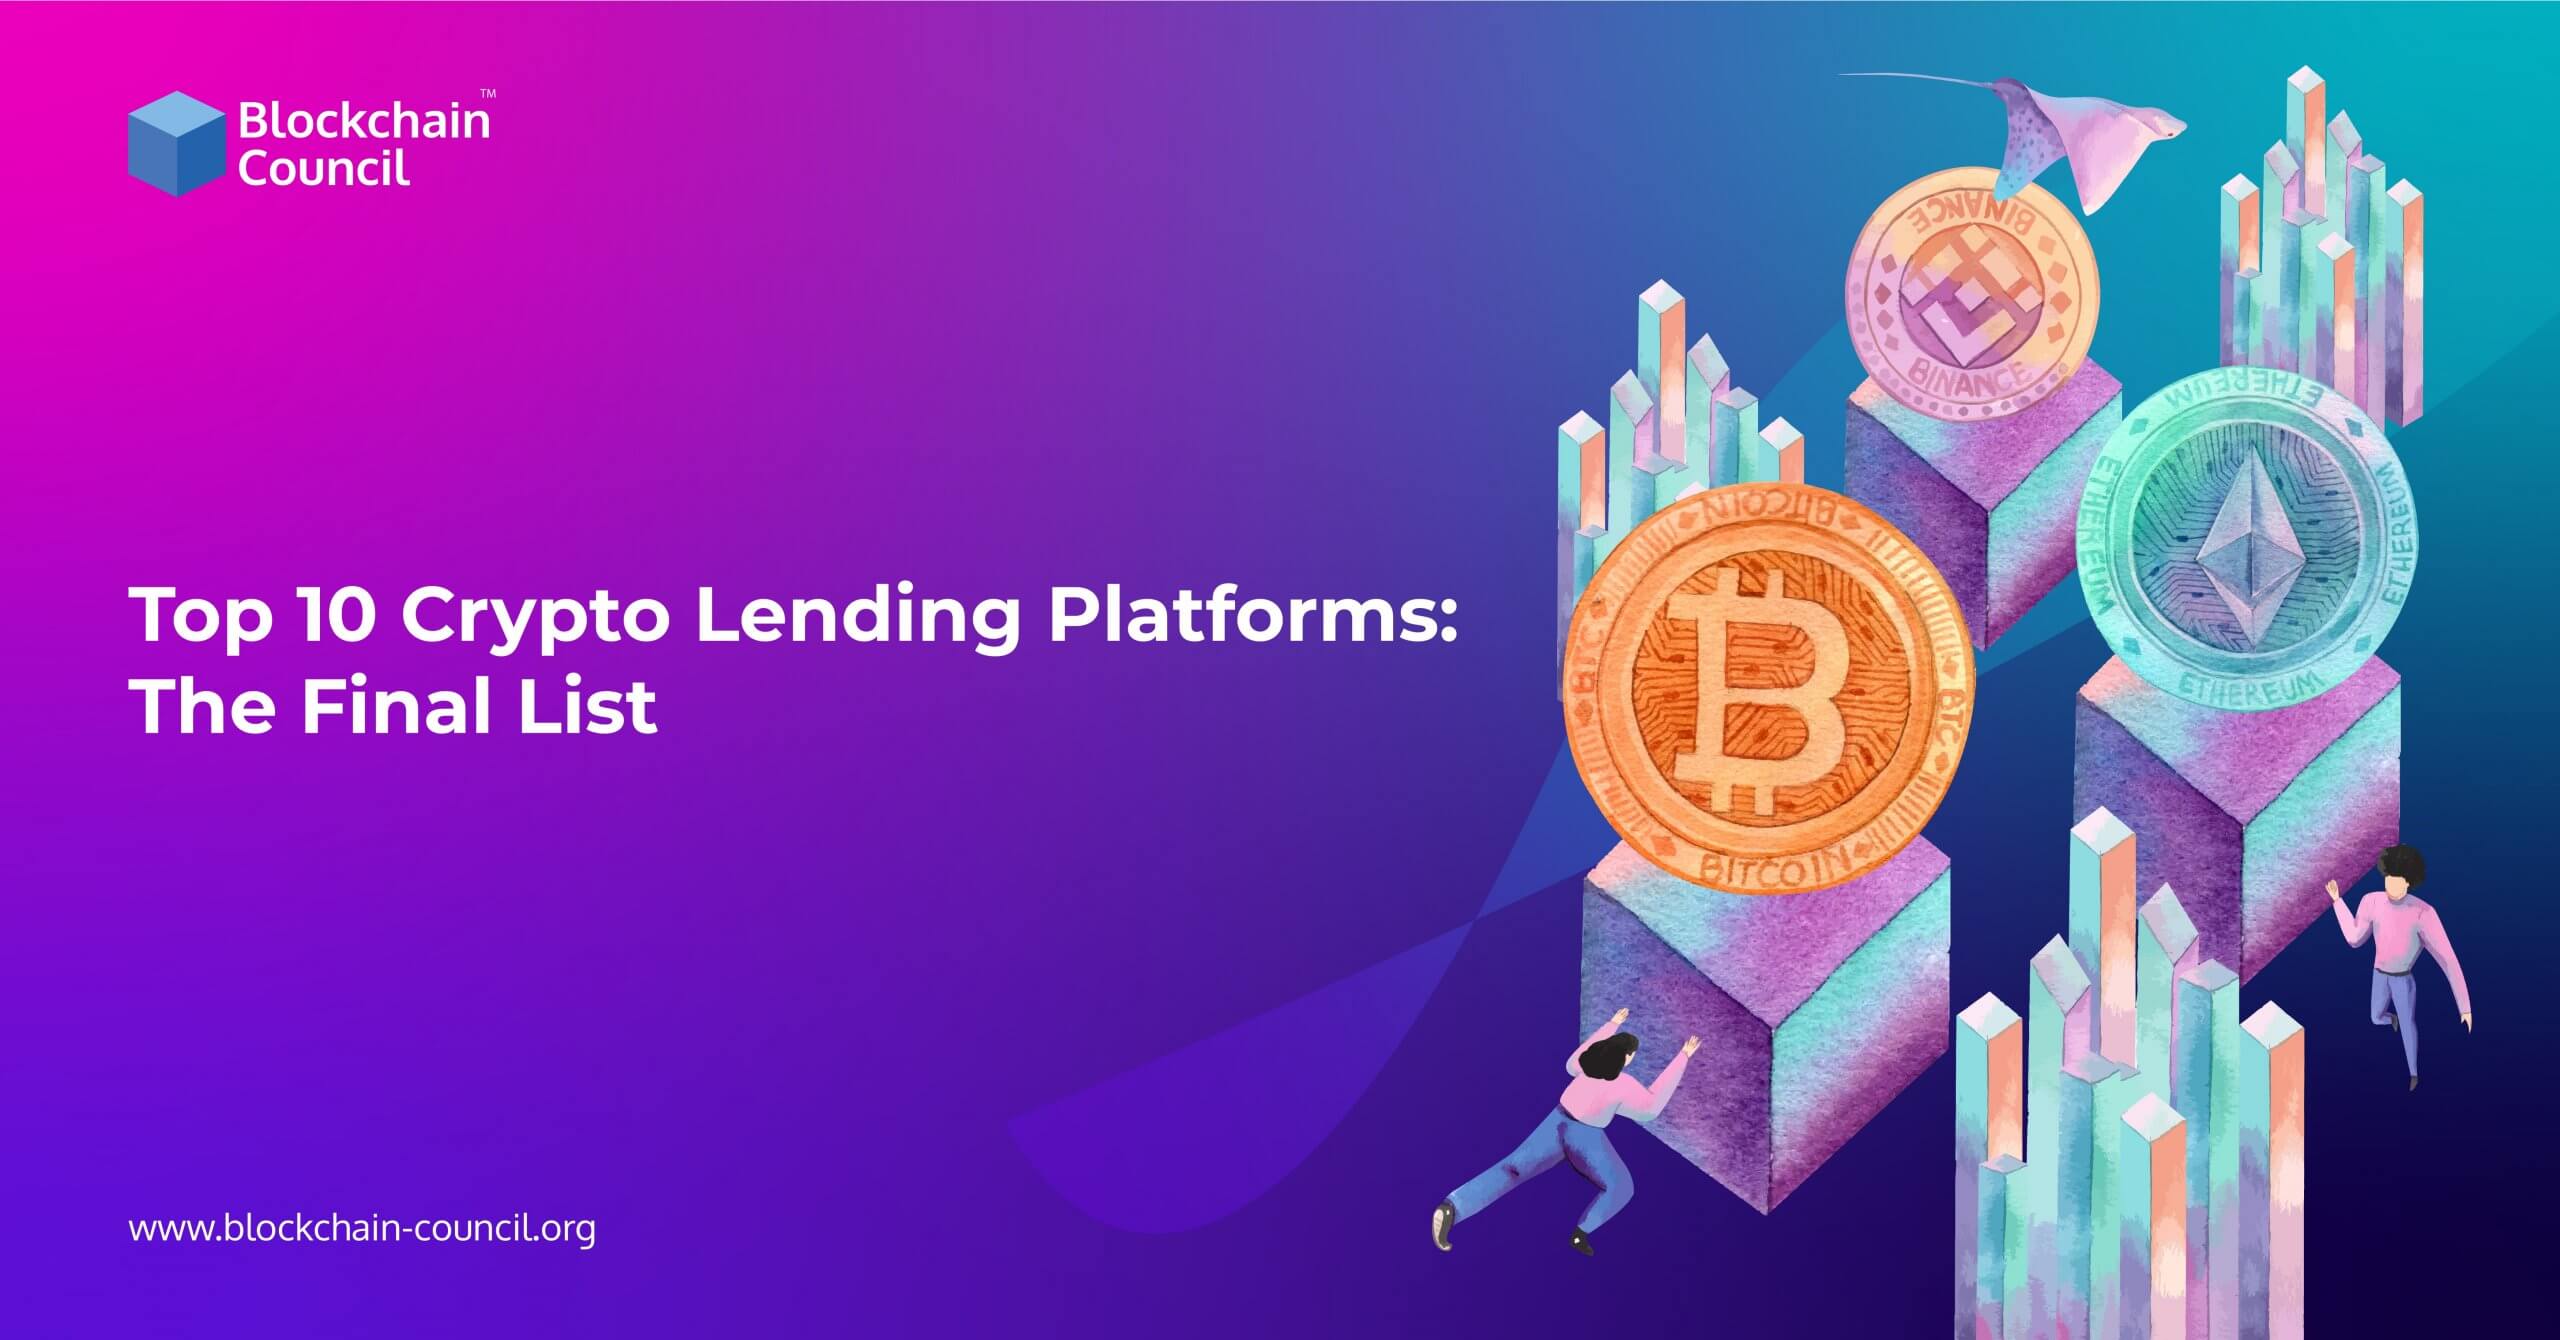 Top 10 Crypto Lending Platforms The Final List-01 (1)